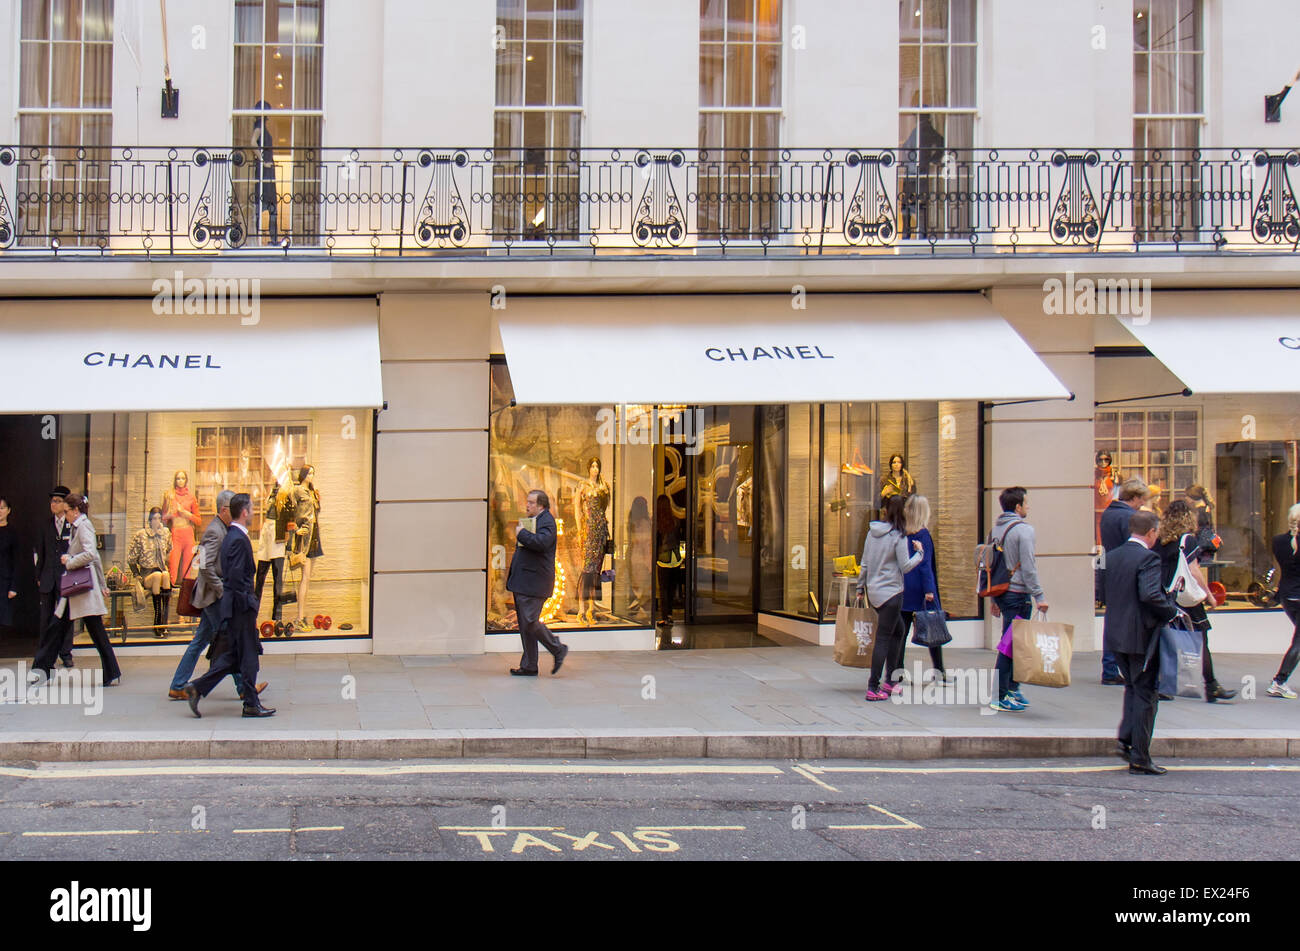 Chanel store on Bond street, London Stock Photo - Alamy